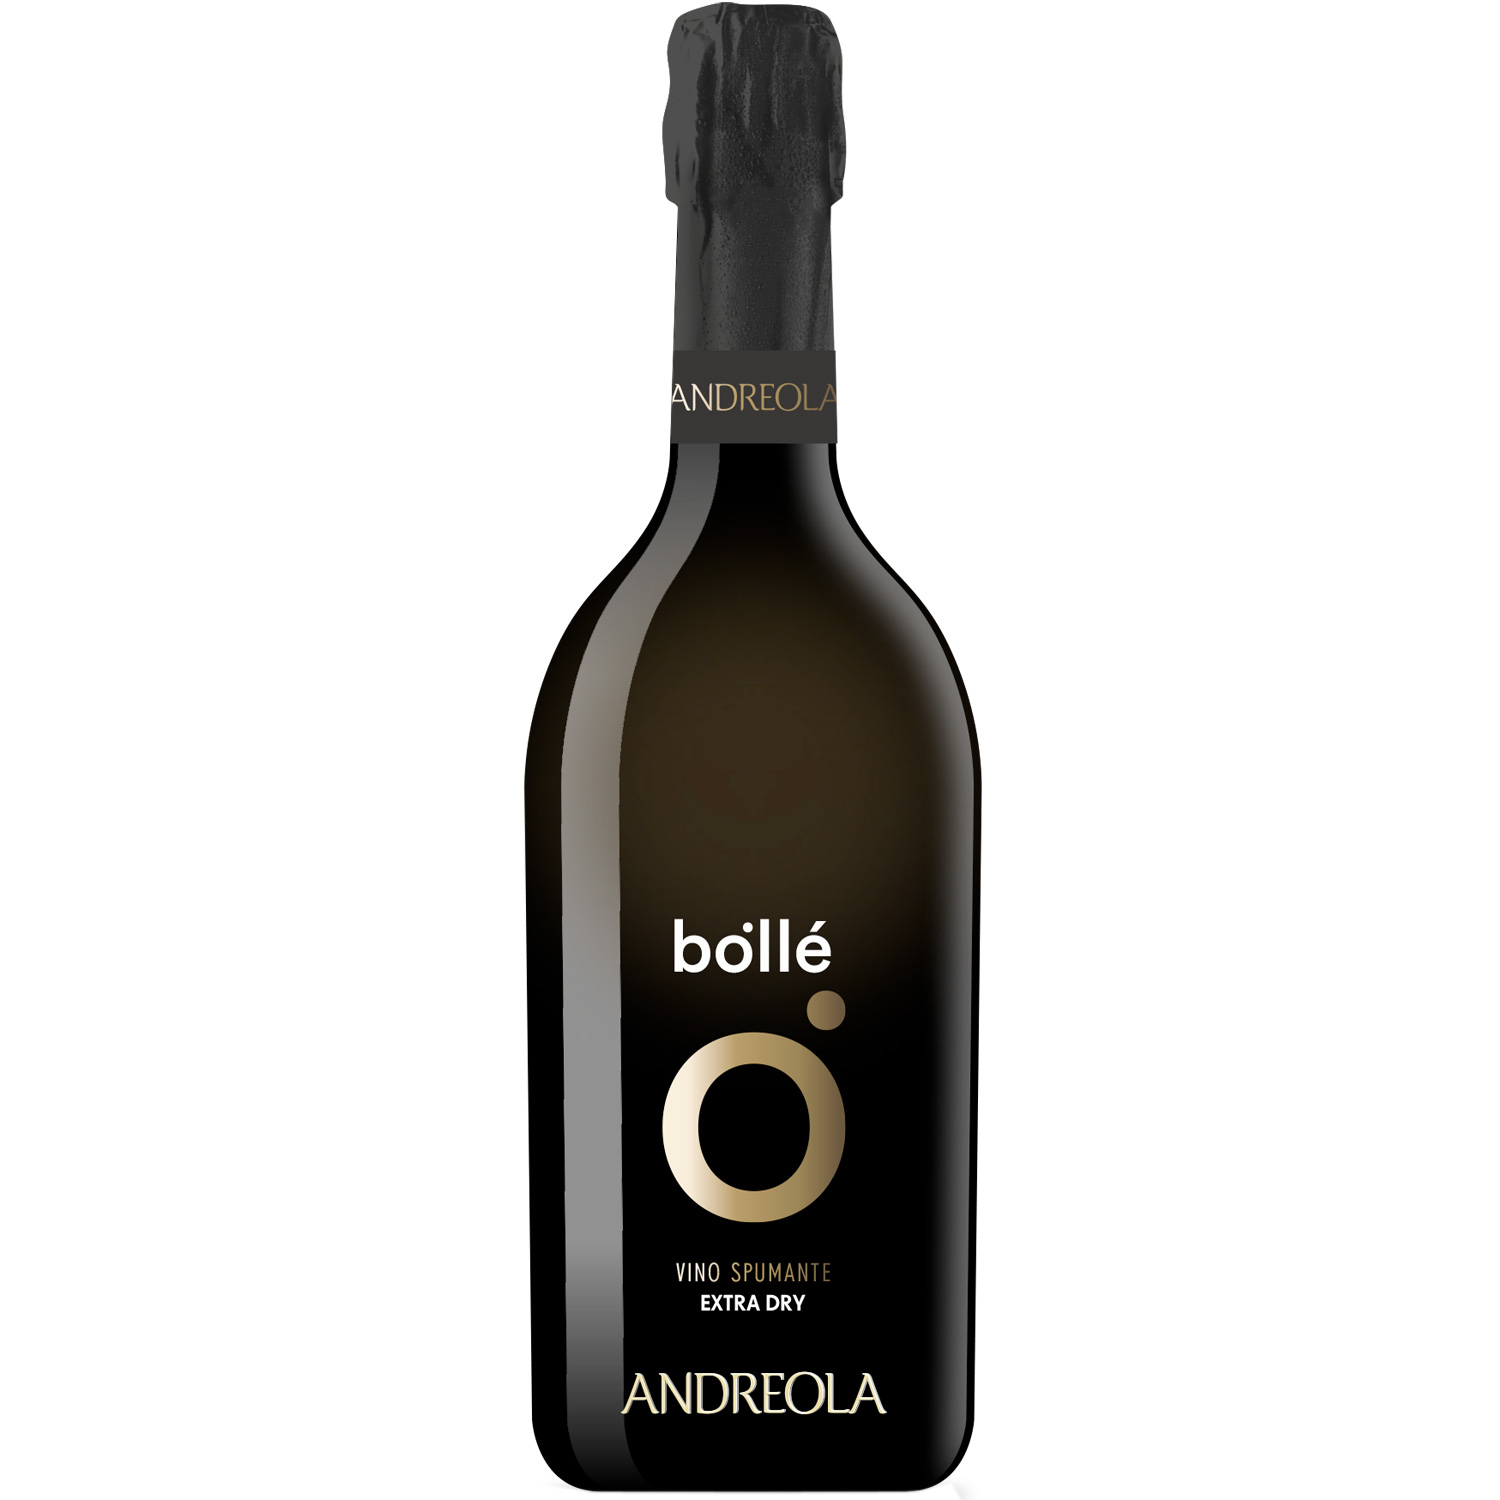 Andreola Bollé Extra Dry